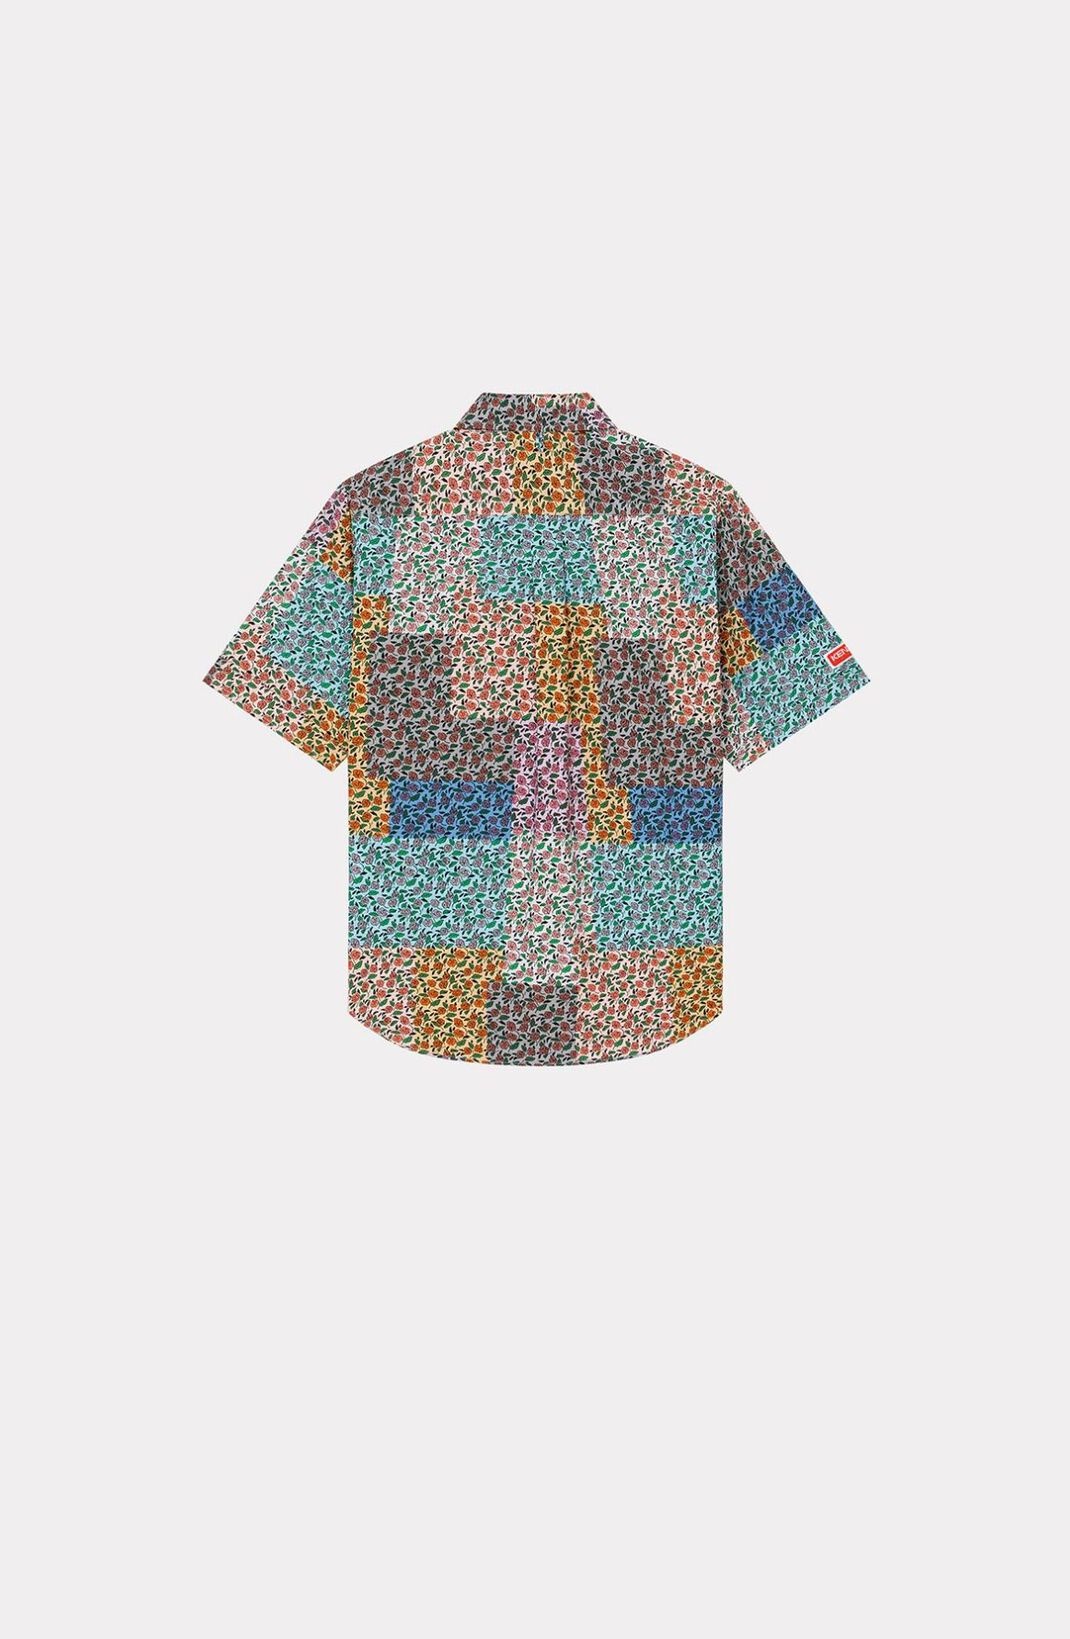 'Patchwork' Hawaiian shirt - 2